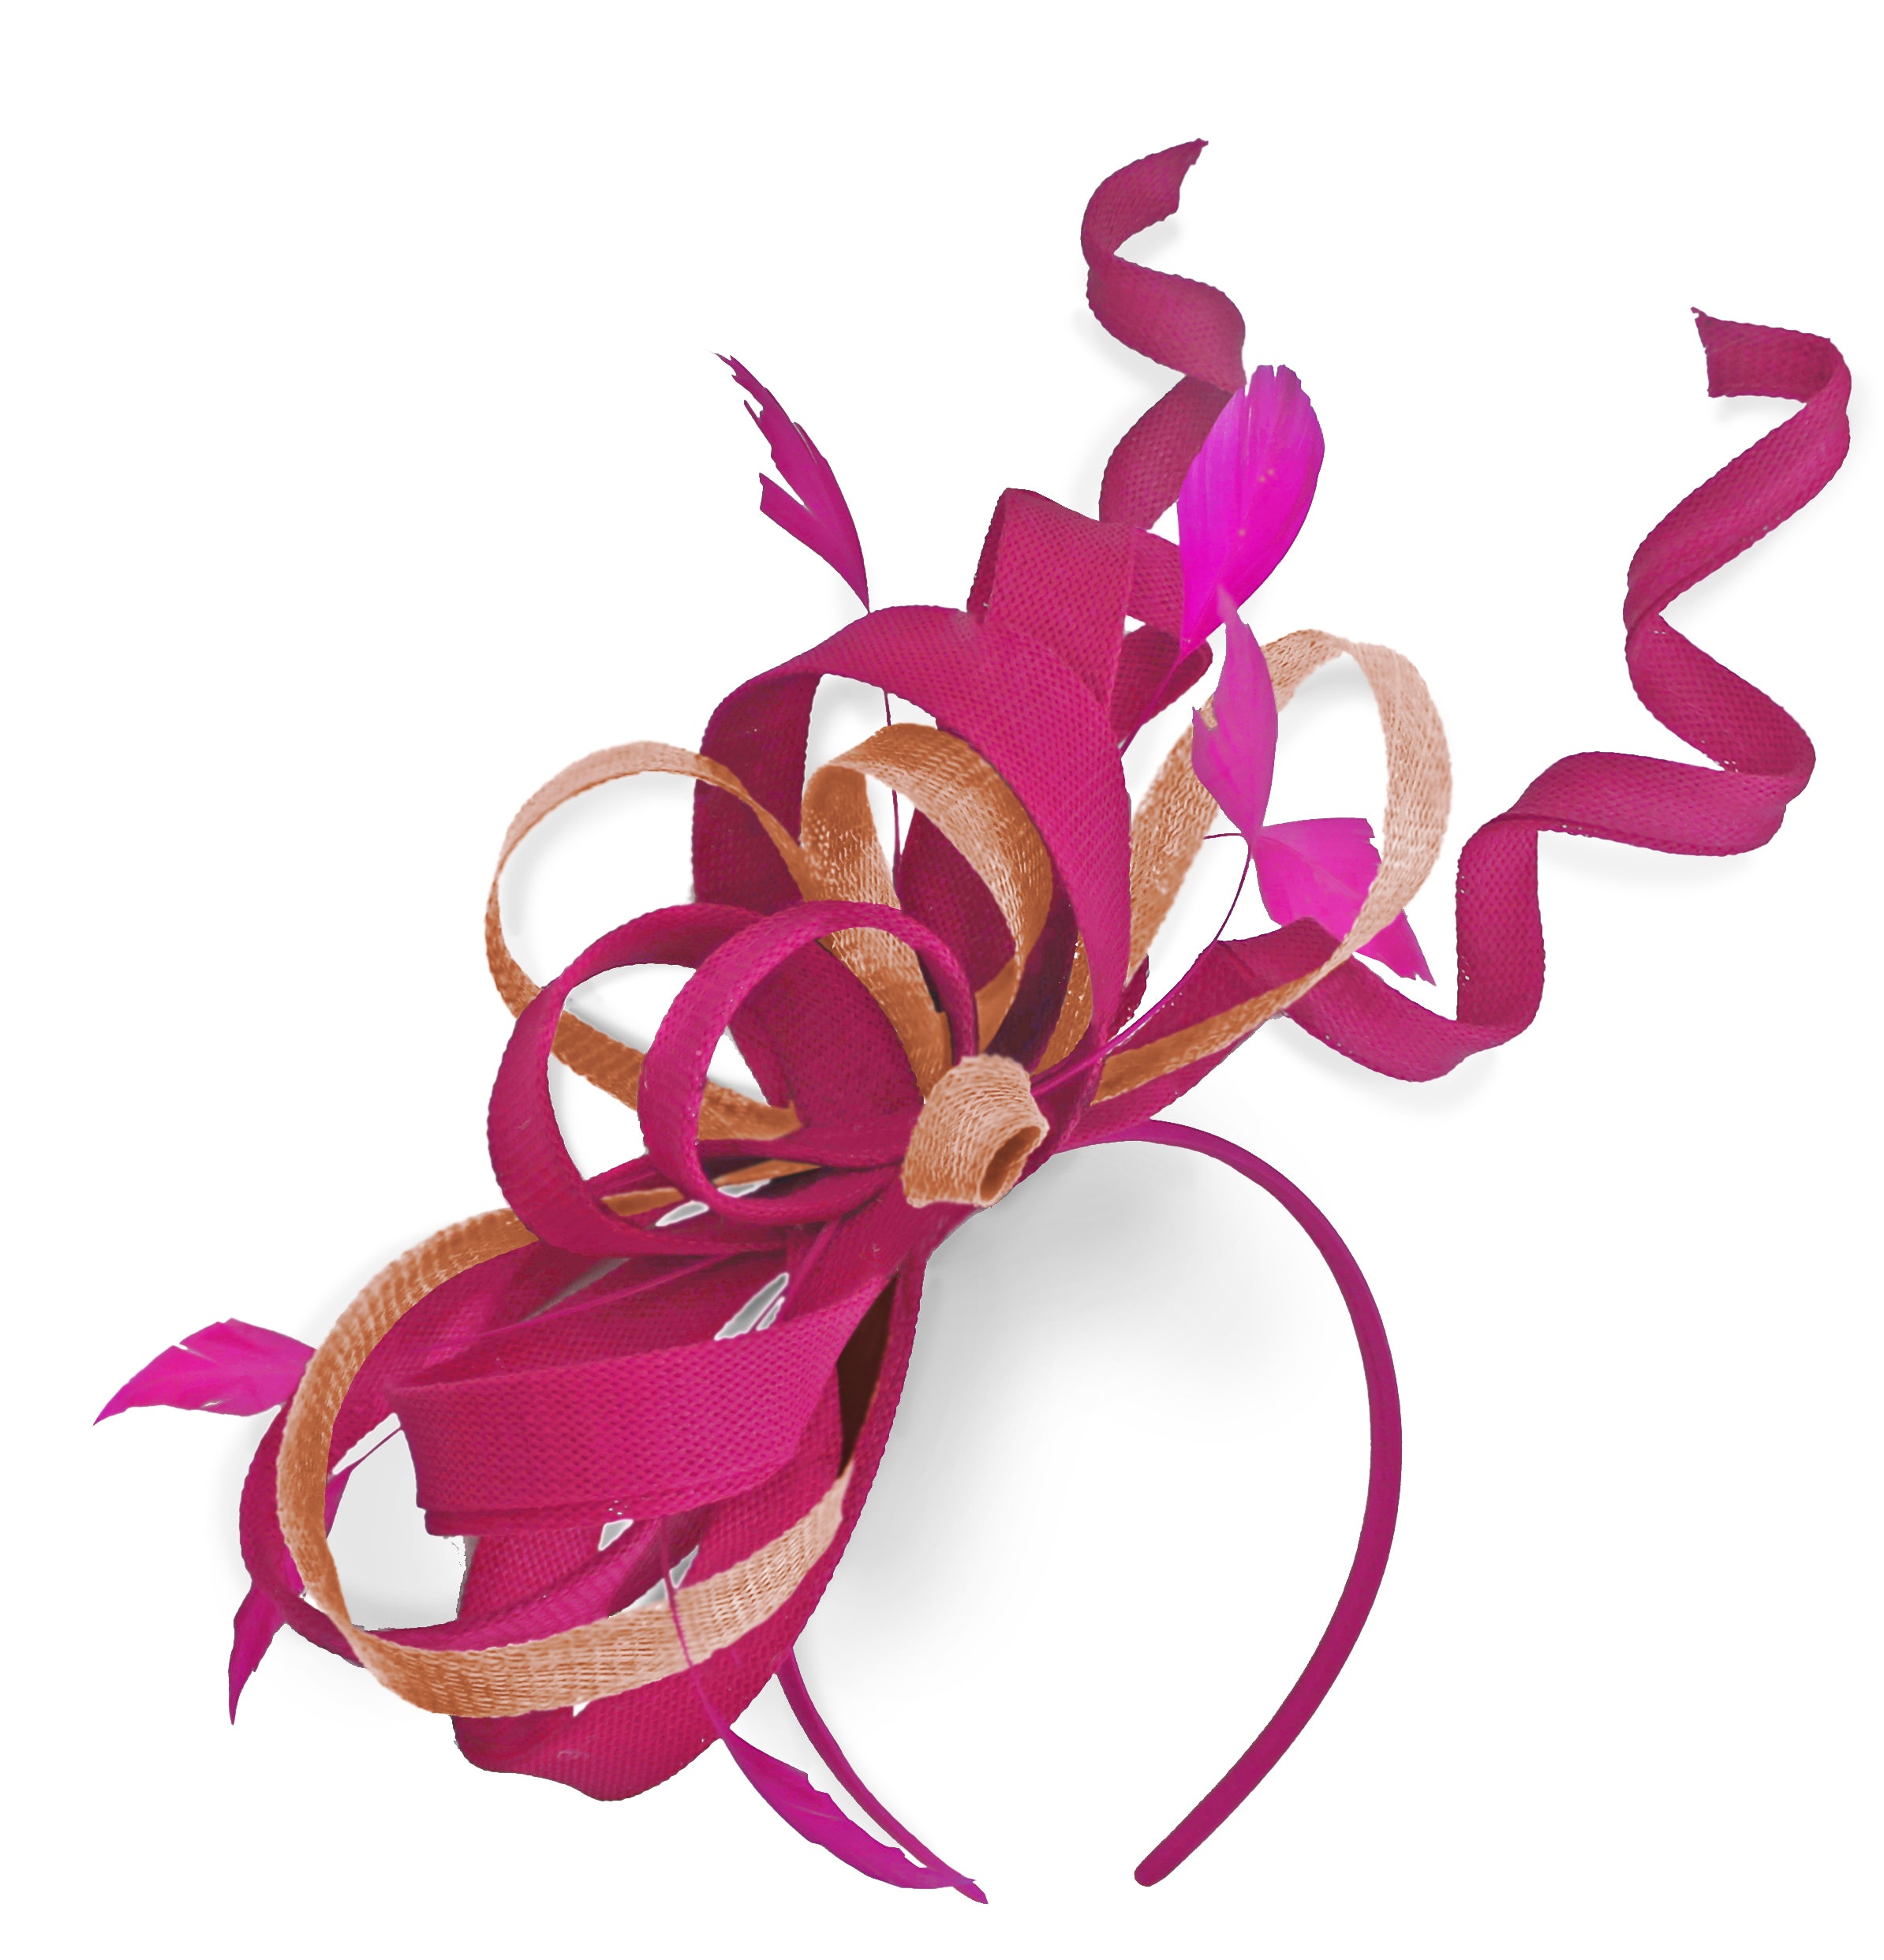 Caprilite Fuchsia Hot Pink and Peach Wedding Swirl Fascinator Headband Alice Band Ascot Races Loop Net